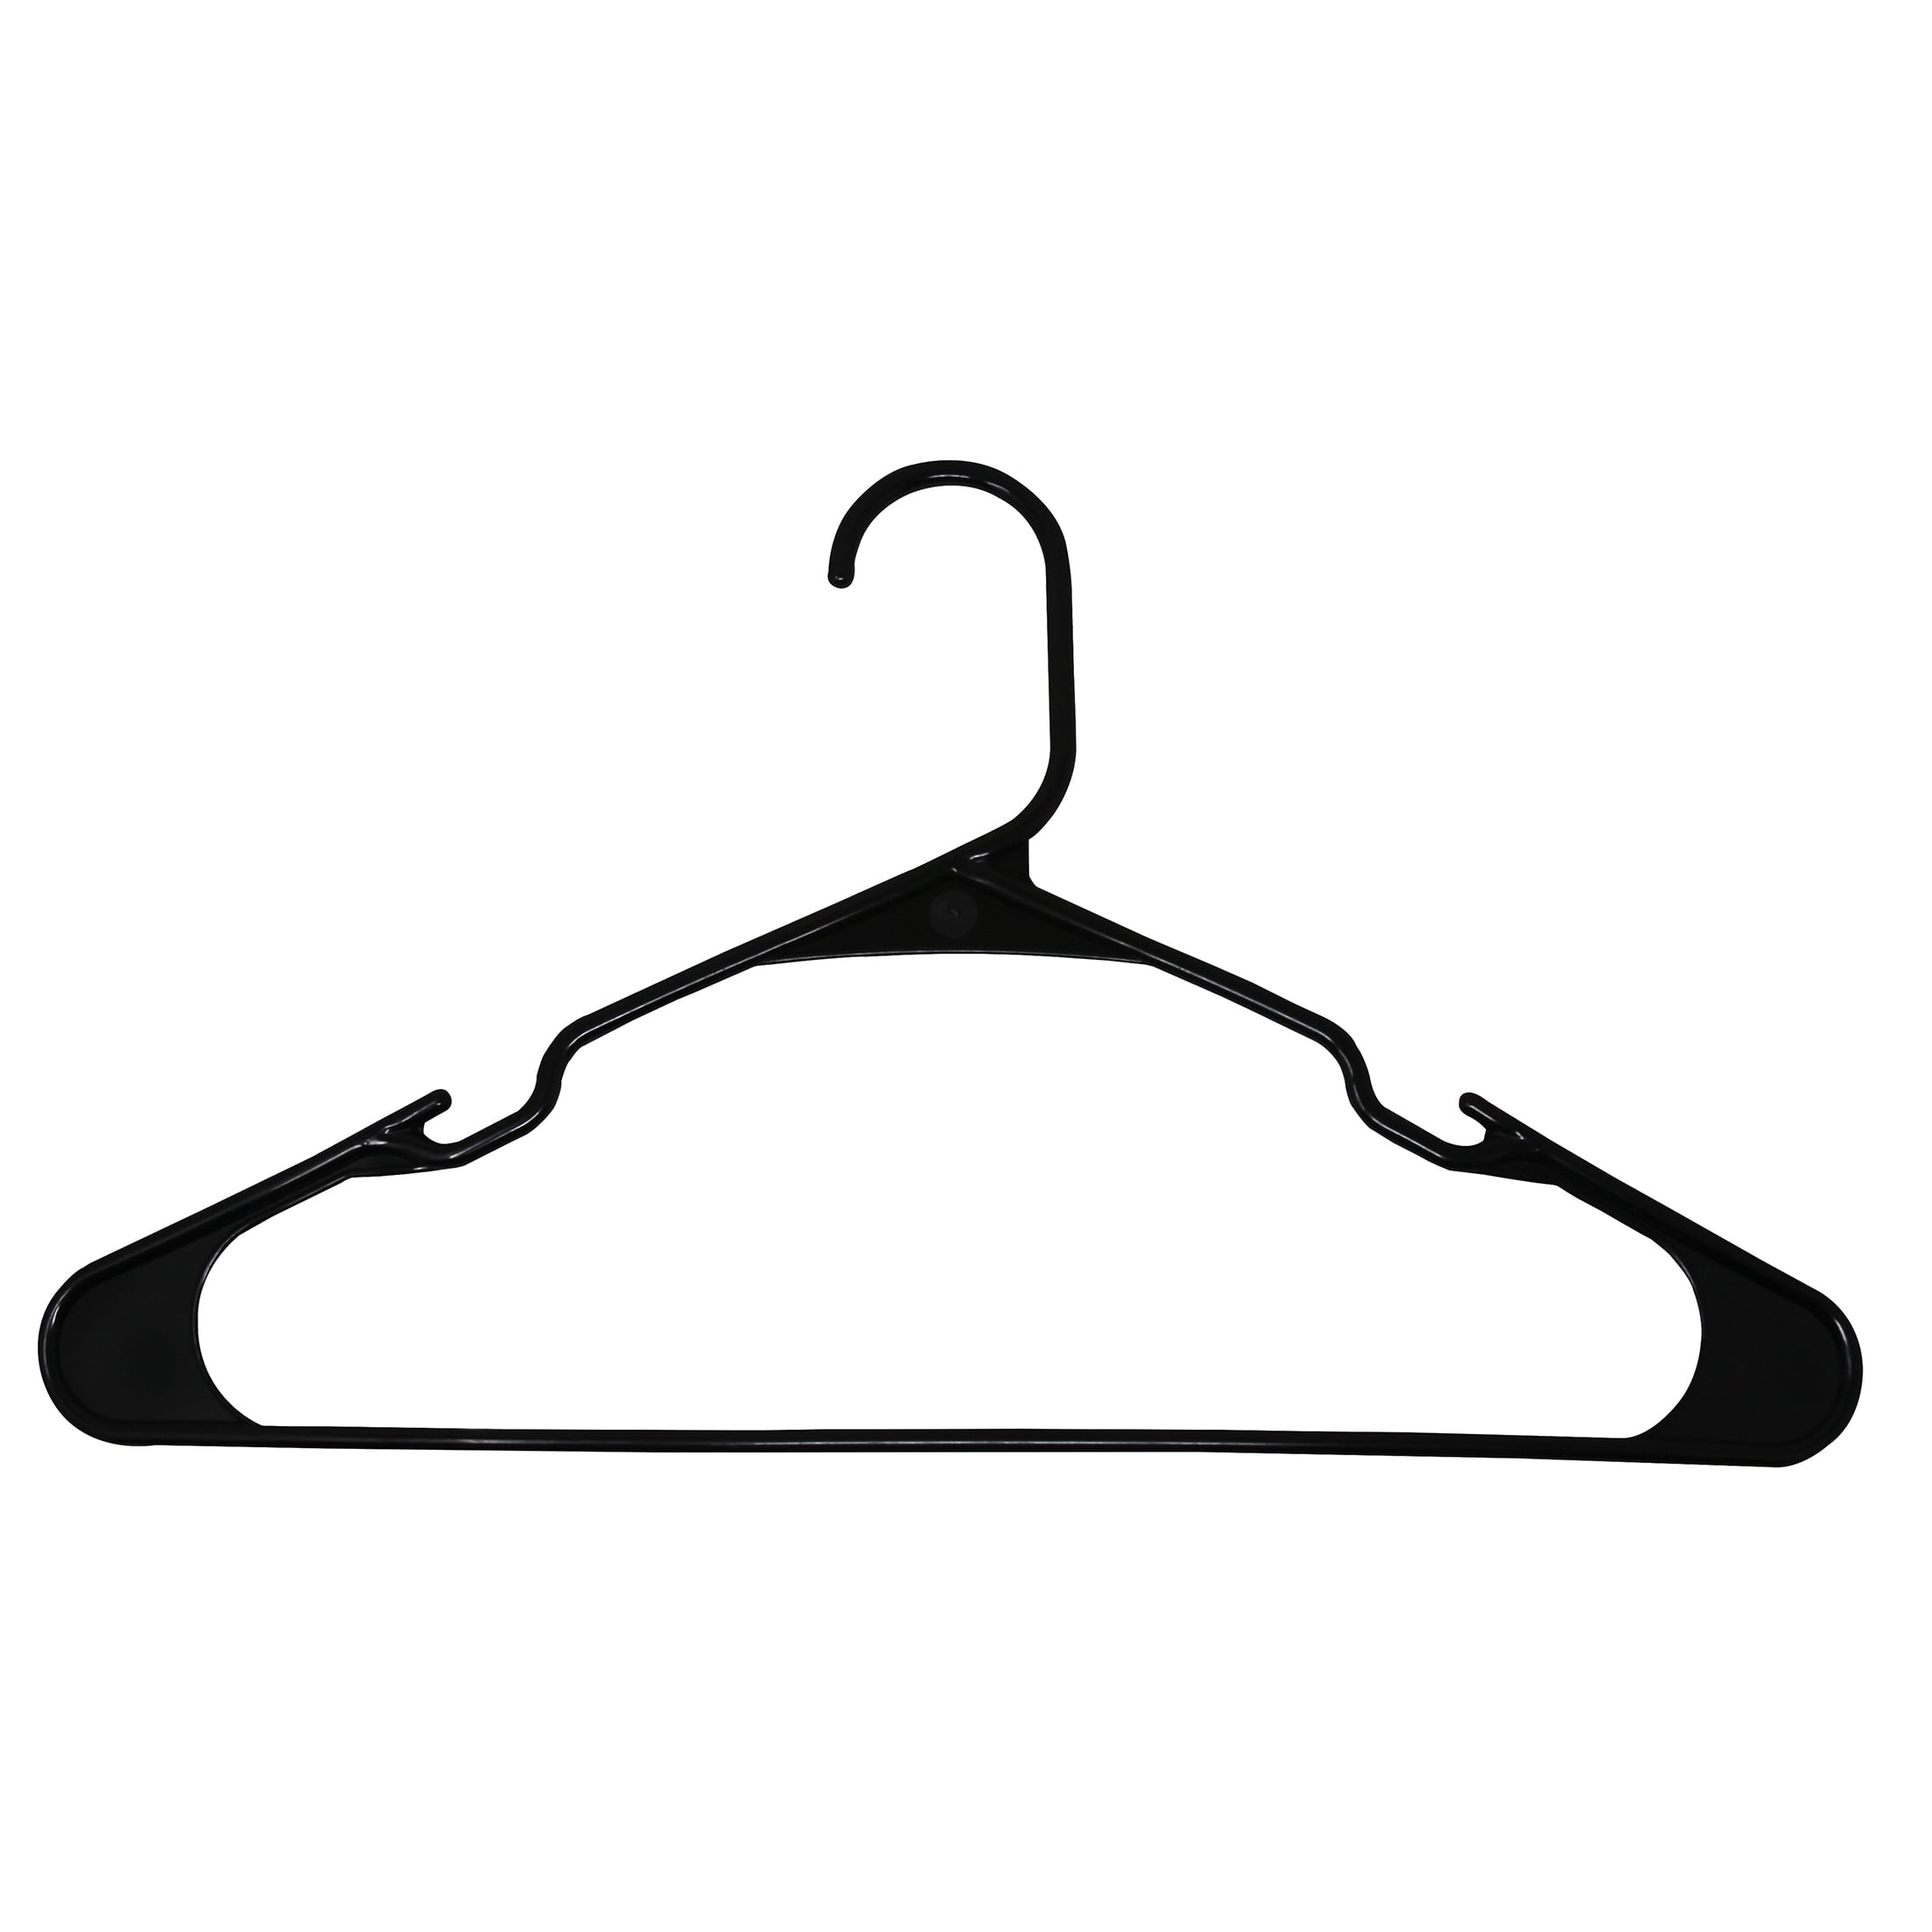 19 Heavy Duty Plastic Hangers - Set of 12 - White By Merrick